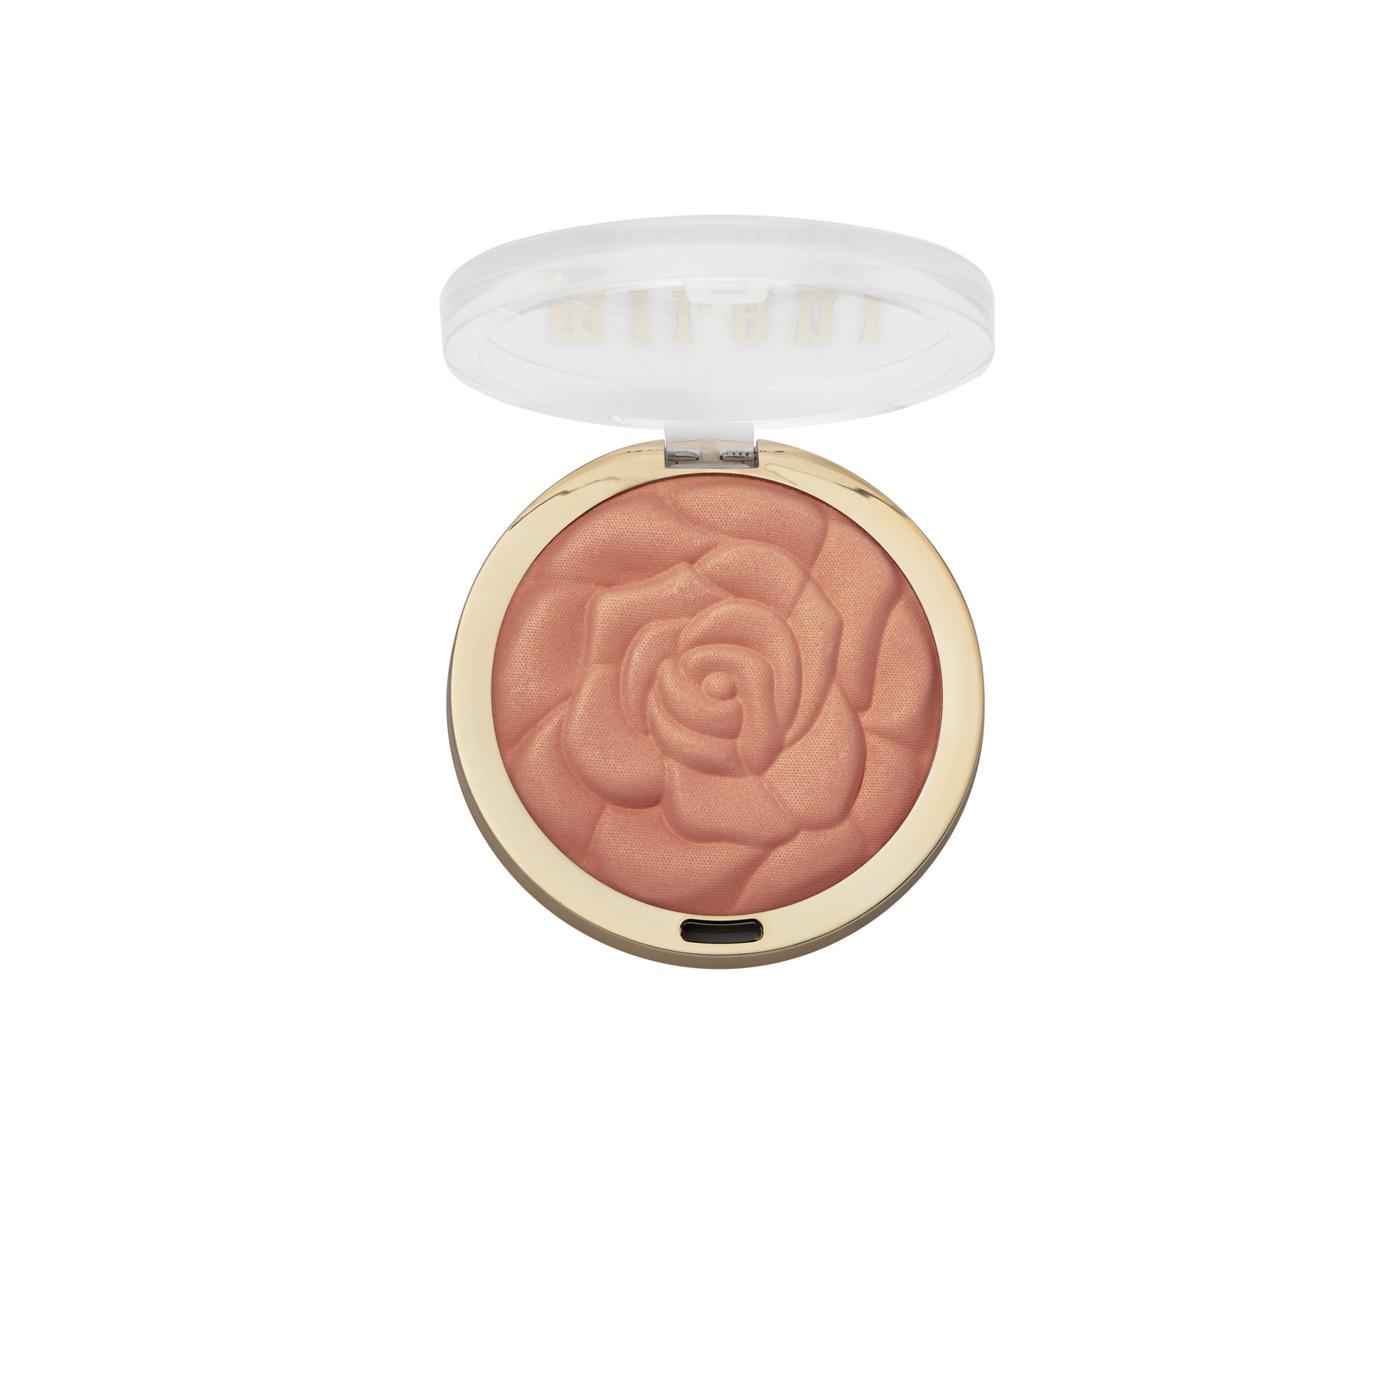 Milani Rose Powder Blush - Blossomtime Rose; image 3 of 5